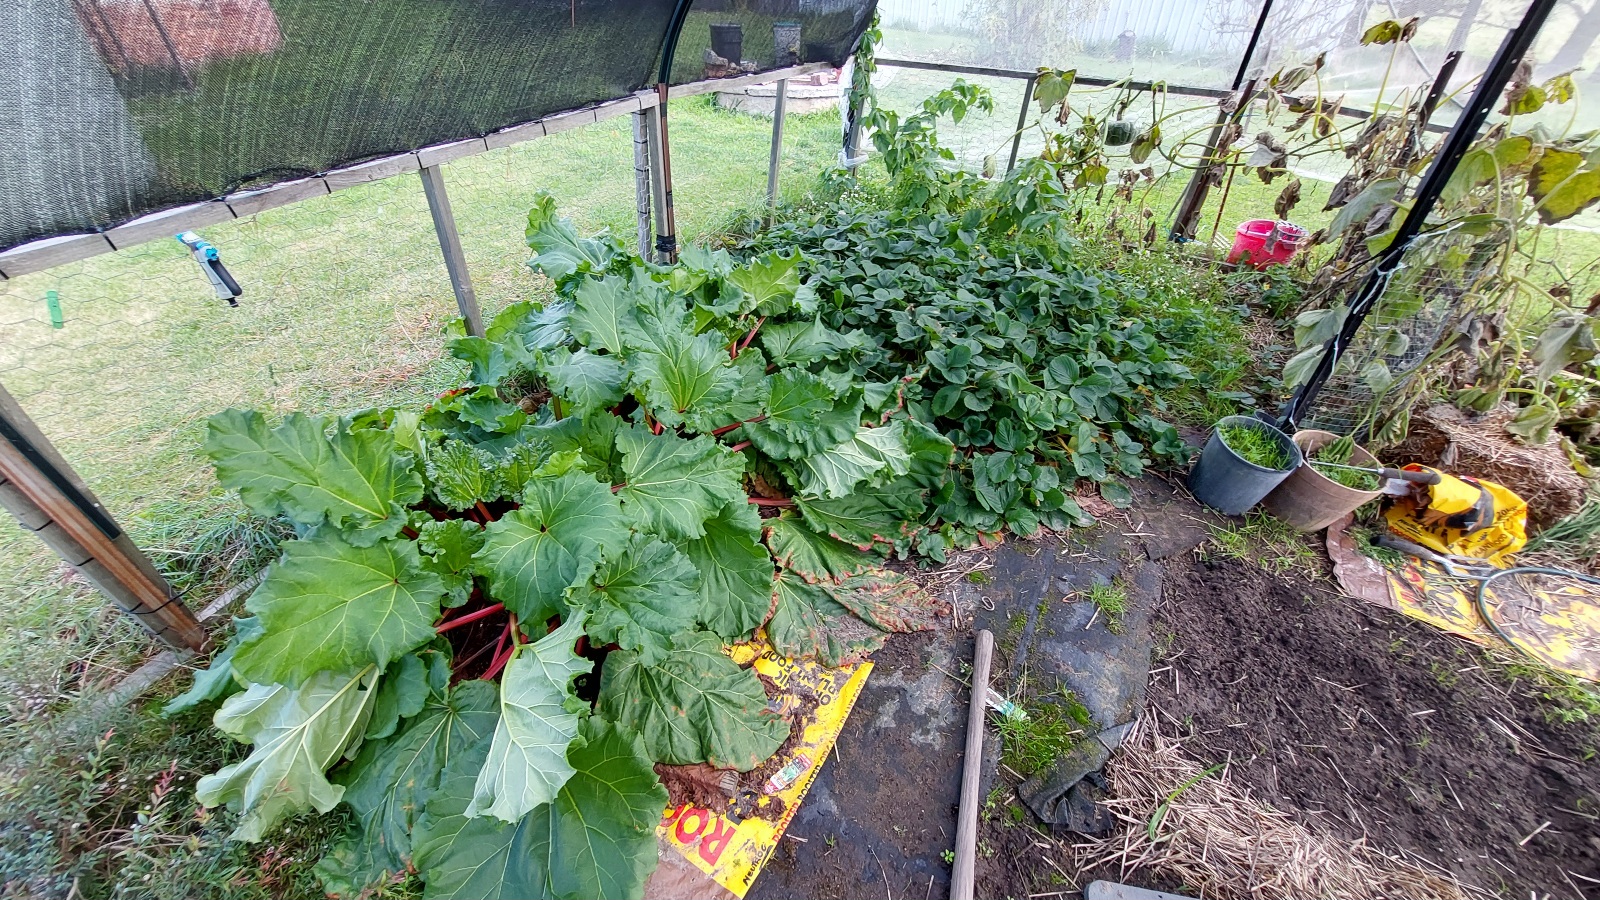 Rhubarb & strawberries